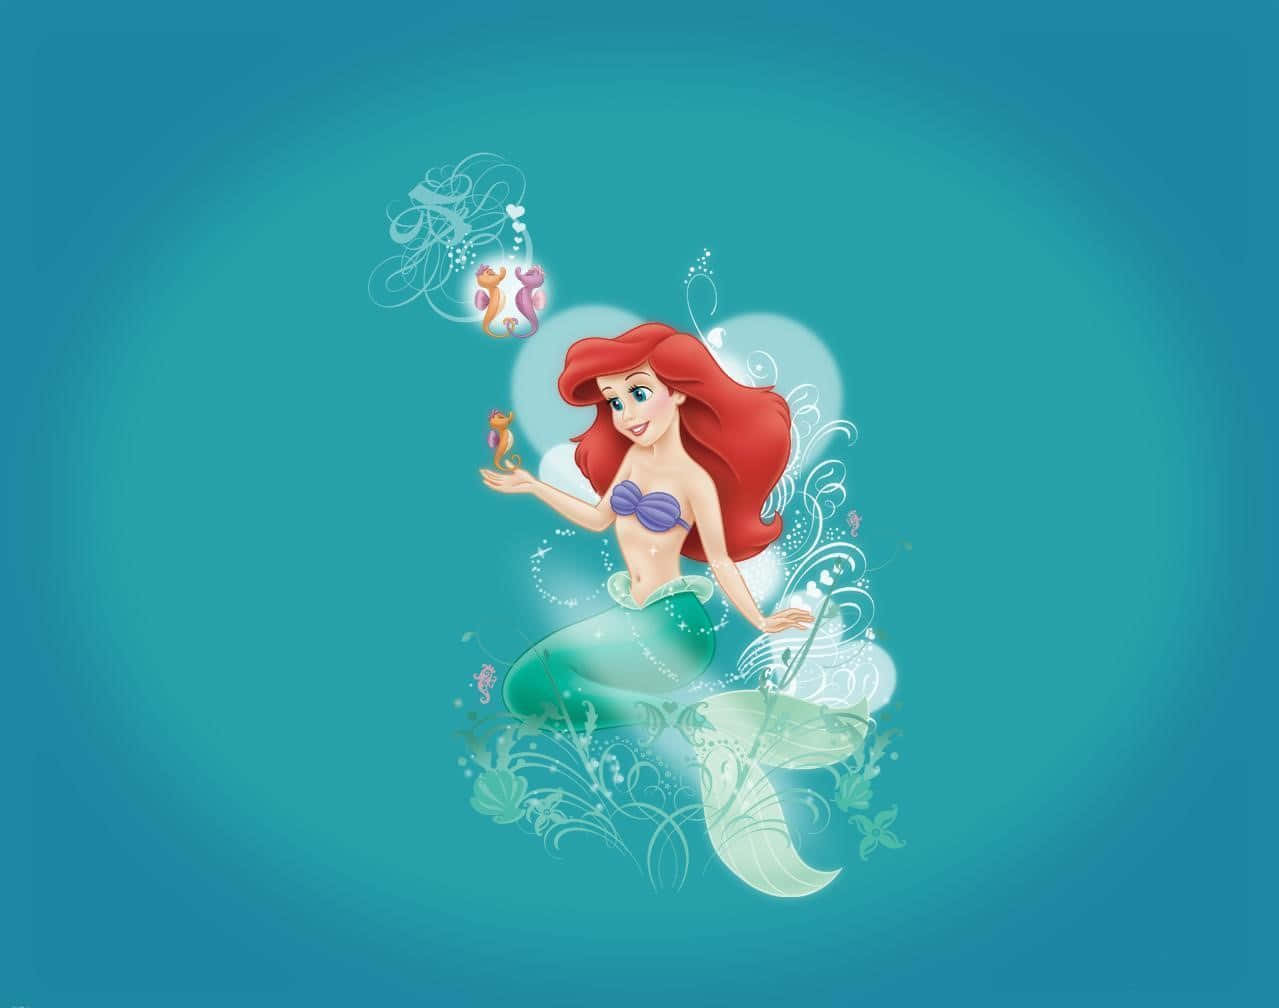 Disney Princess Ariel From The Little Mermaid Wallpaper